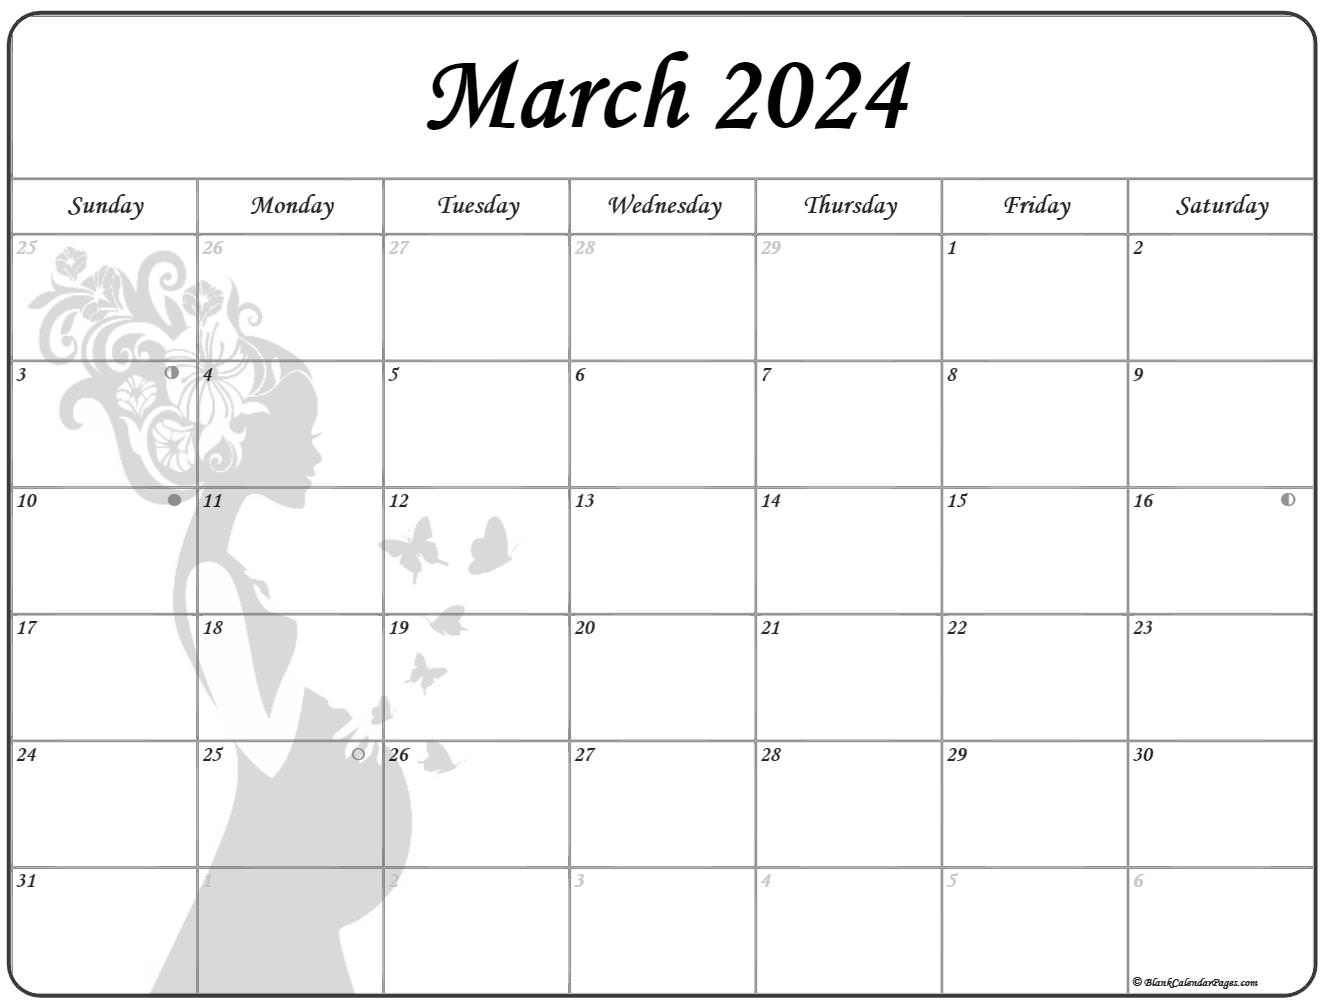 March 2020 Pregnancy Calendar